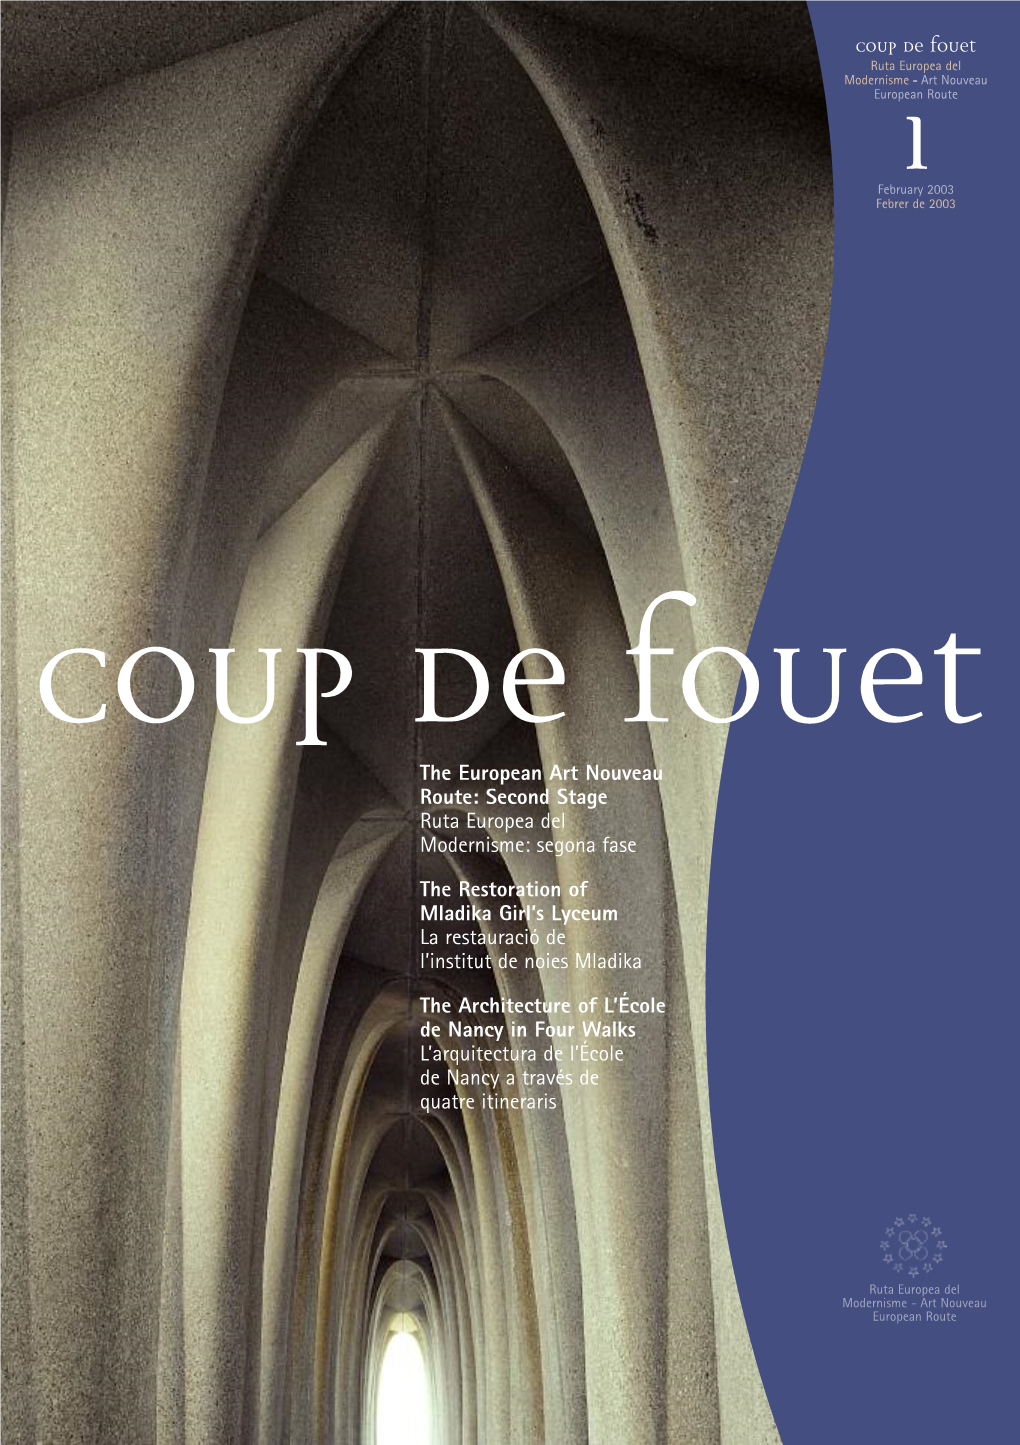 Coup De Fouet Ruta Europea Del Modernisme - Art Nouveau European1 Route February 2003 Febrer De 2003